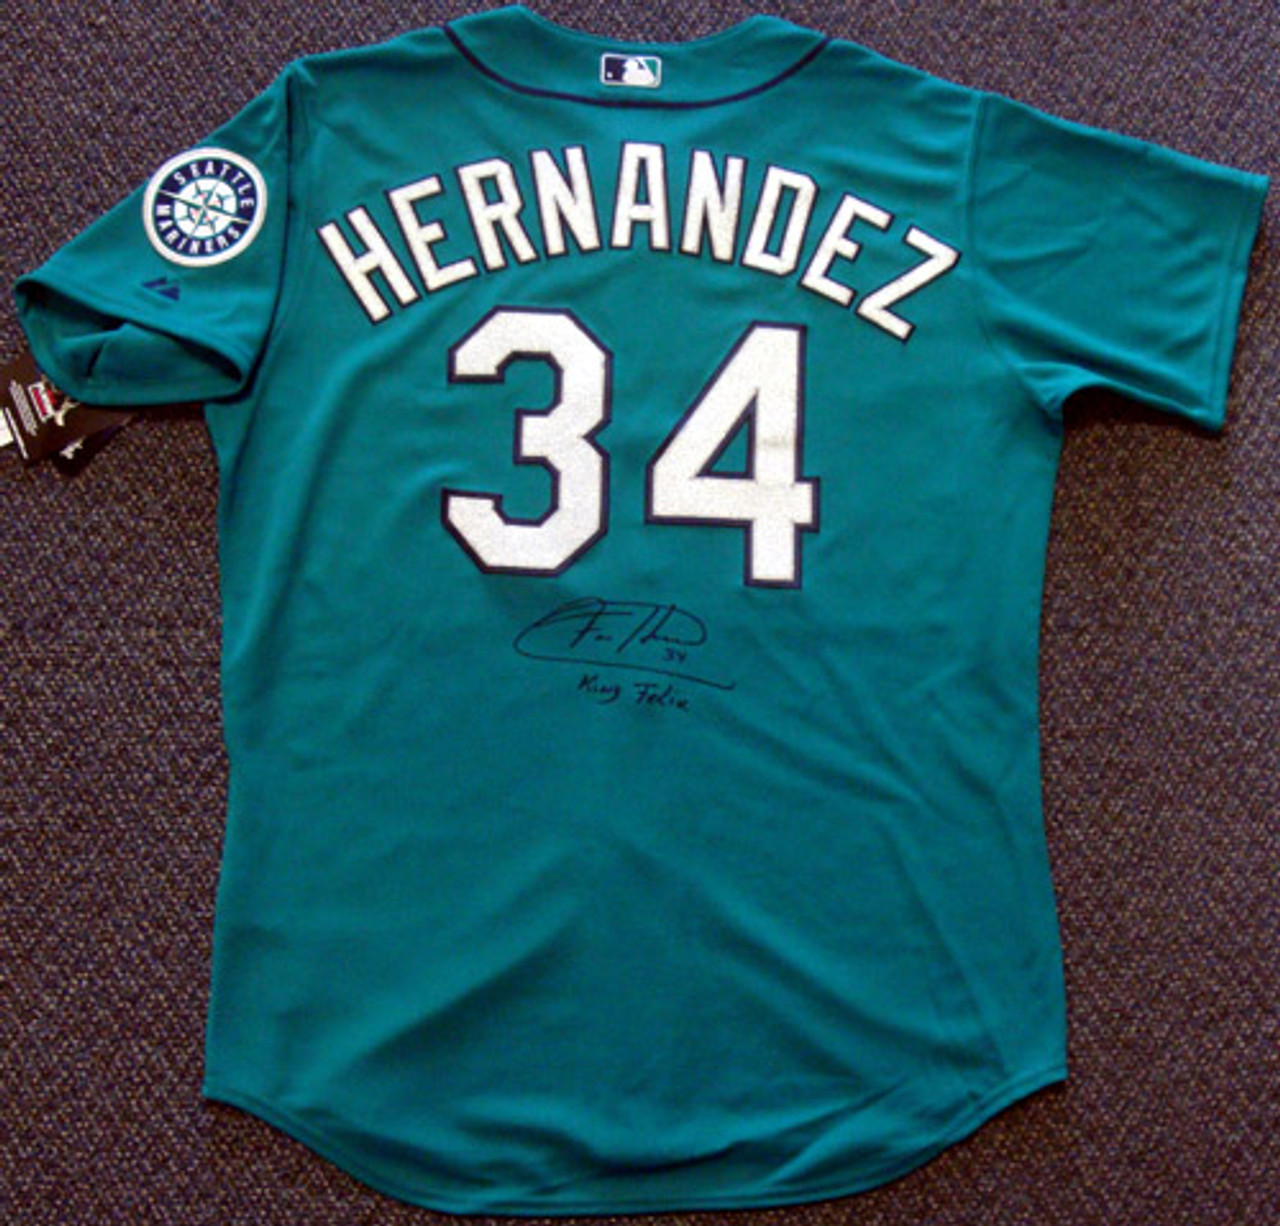 Seattle Mariners Felix Hernandez Autographed Teal Authentic Majestic Jersey  King Felix Size 48 PSA/DNA Stock #33043 - Mill Creek Sports